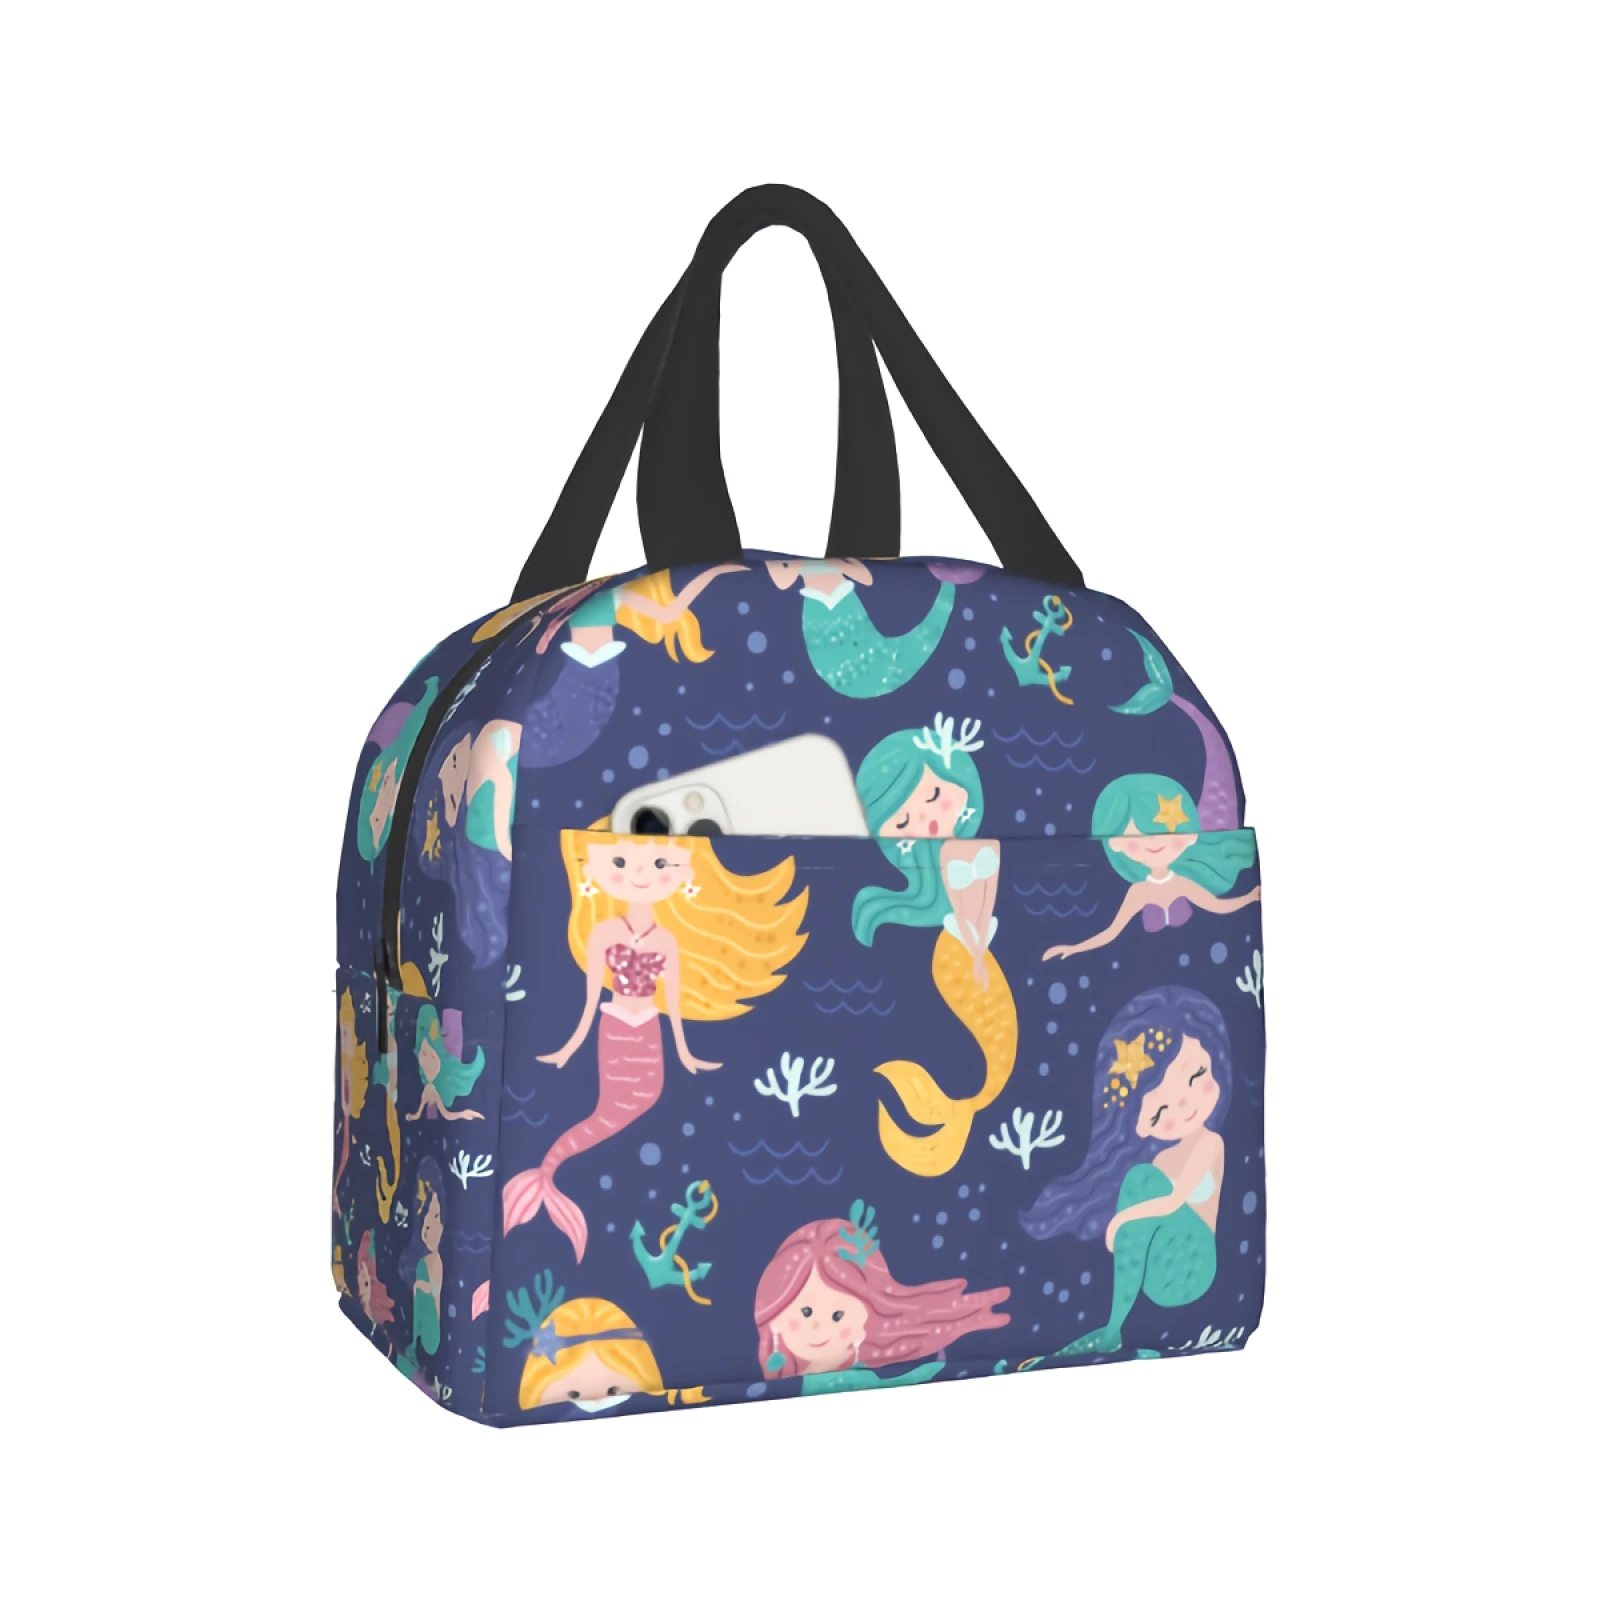 

Cartoon Mermaids Lunch Bag Girly Cooler Bag Cute Blue Insulated Bag for Women Men Teen Girls Boys Office Work School Picnic